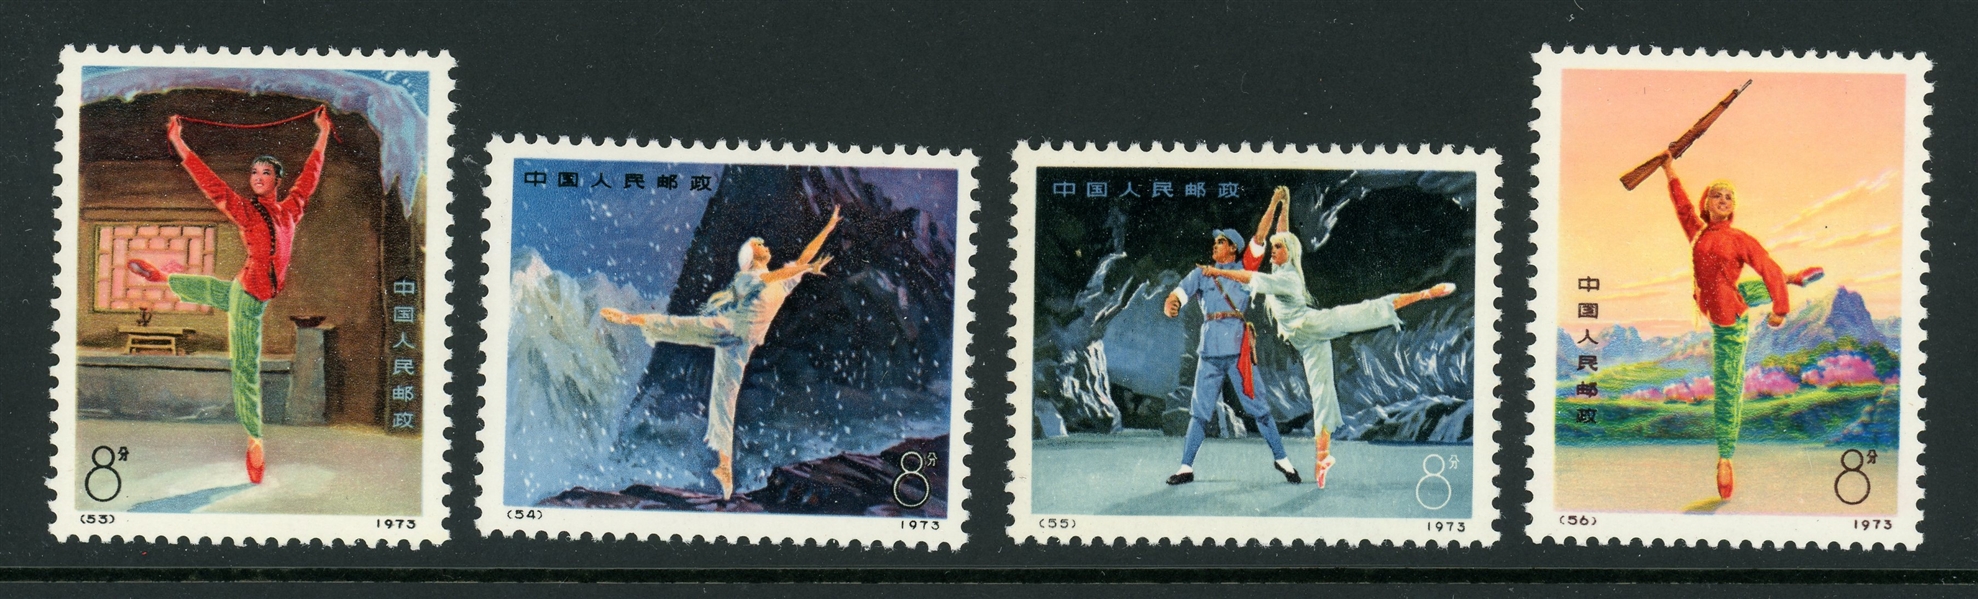 People's Republic of China Scott 1126-1129 MVLH Complete Set - 1973 Ballet (SCV $175)